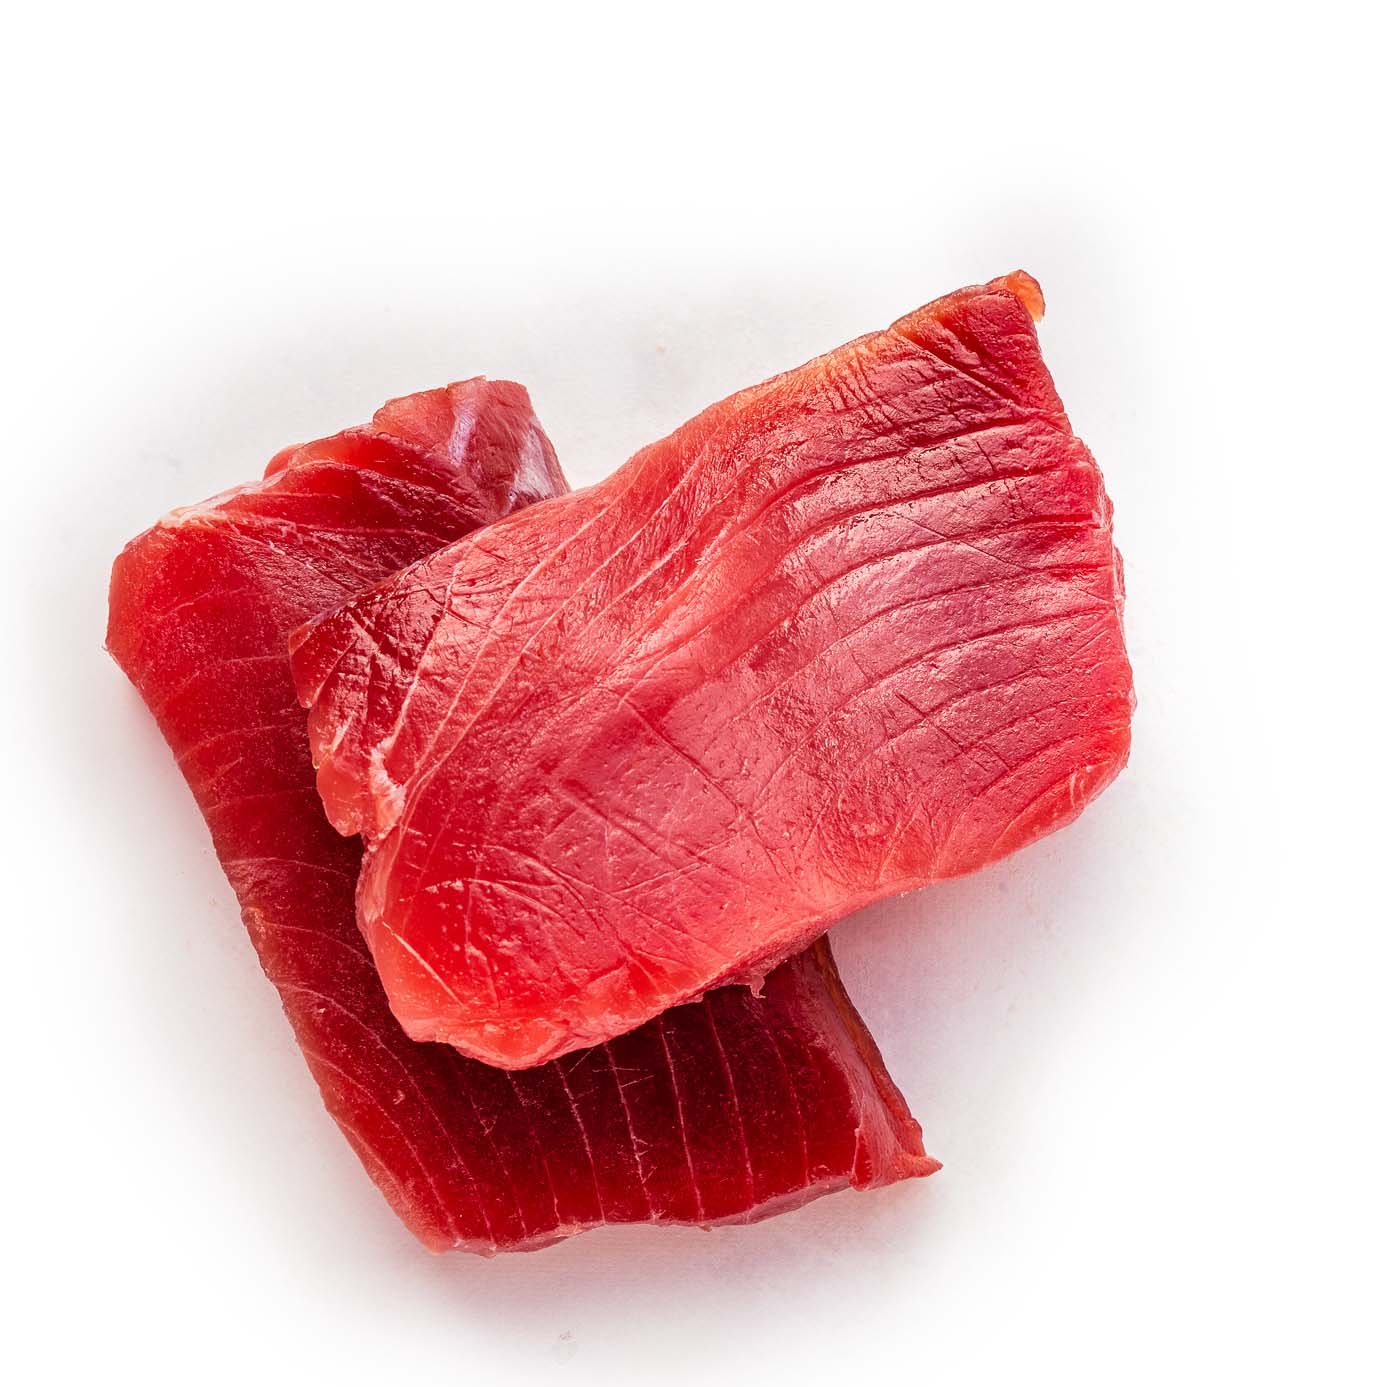 Yellow Fin Tuna Steaks from Steve Costi seafood